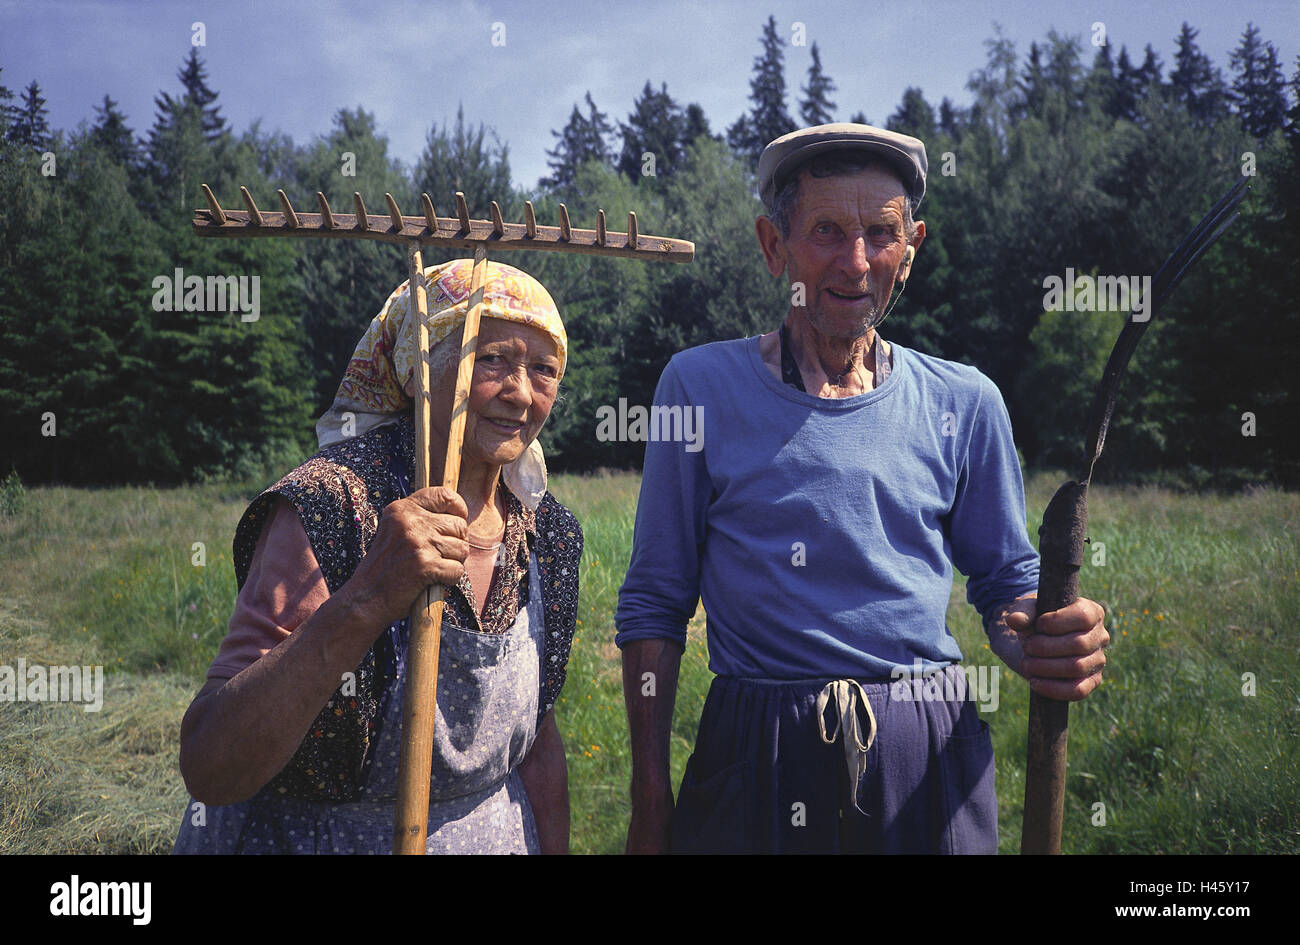 Czech Republic, Dobra Voda, pawn, woman, man, agriculture, rurally, headscarf, headgear, rake, rake, tools, hayfork, smile, Stock Photo